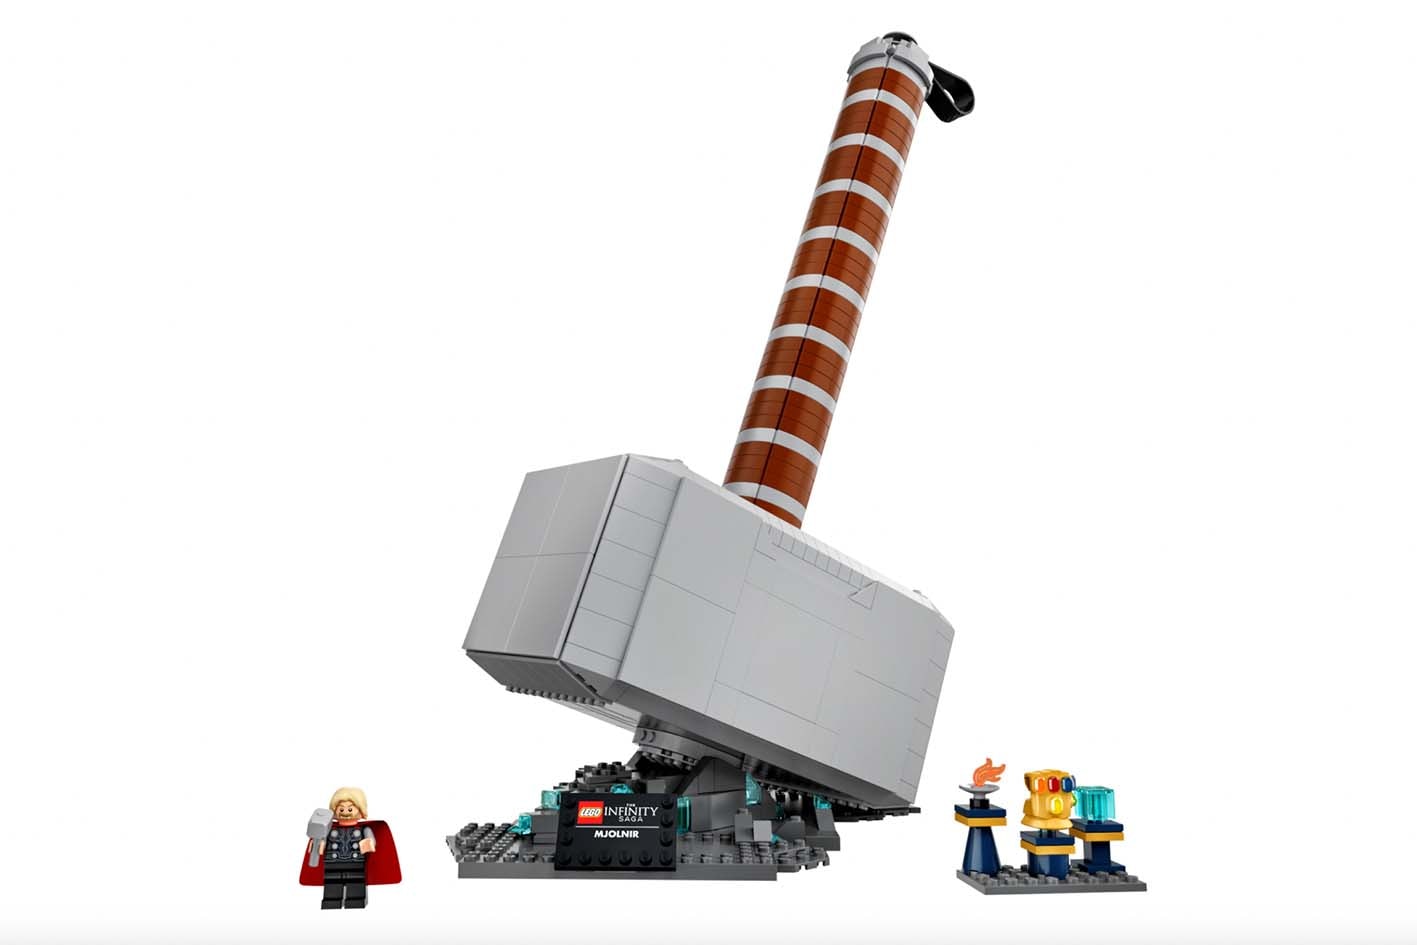 LEGO x Marvel 真人尺寸「雷神之鎚」模型玩具台灣發售情報公開